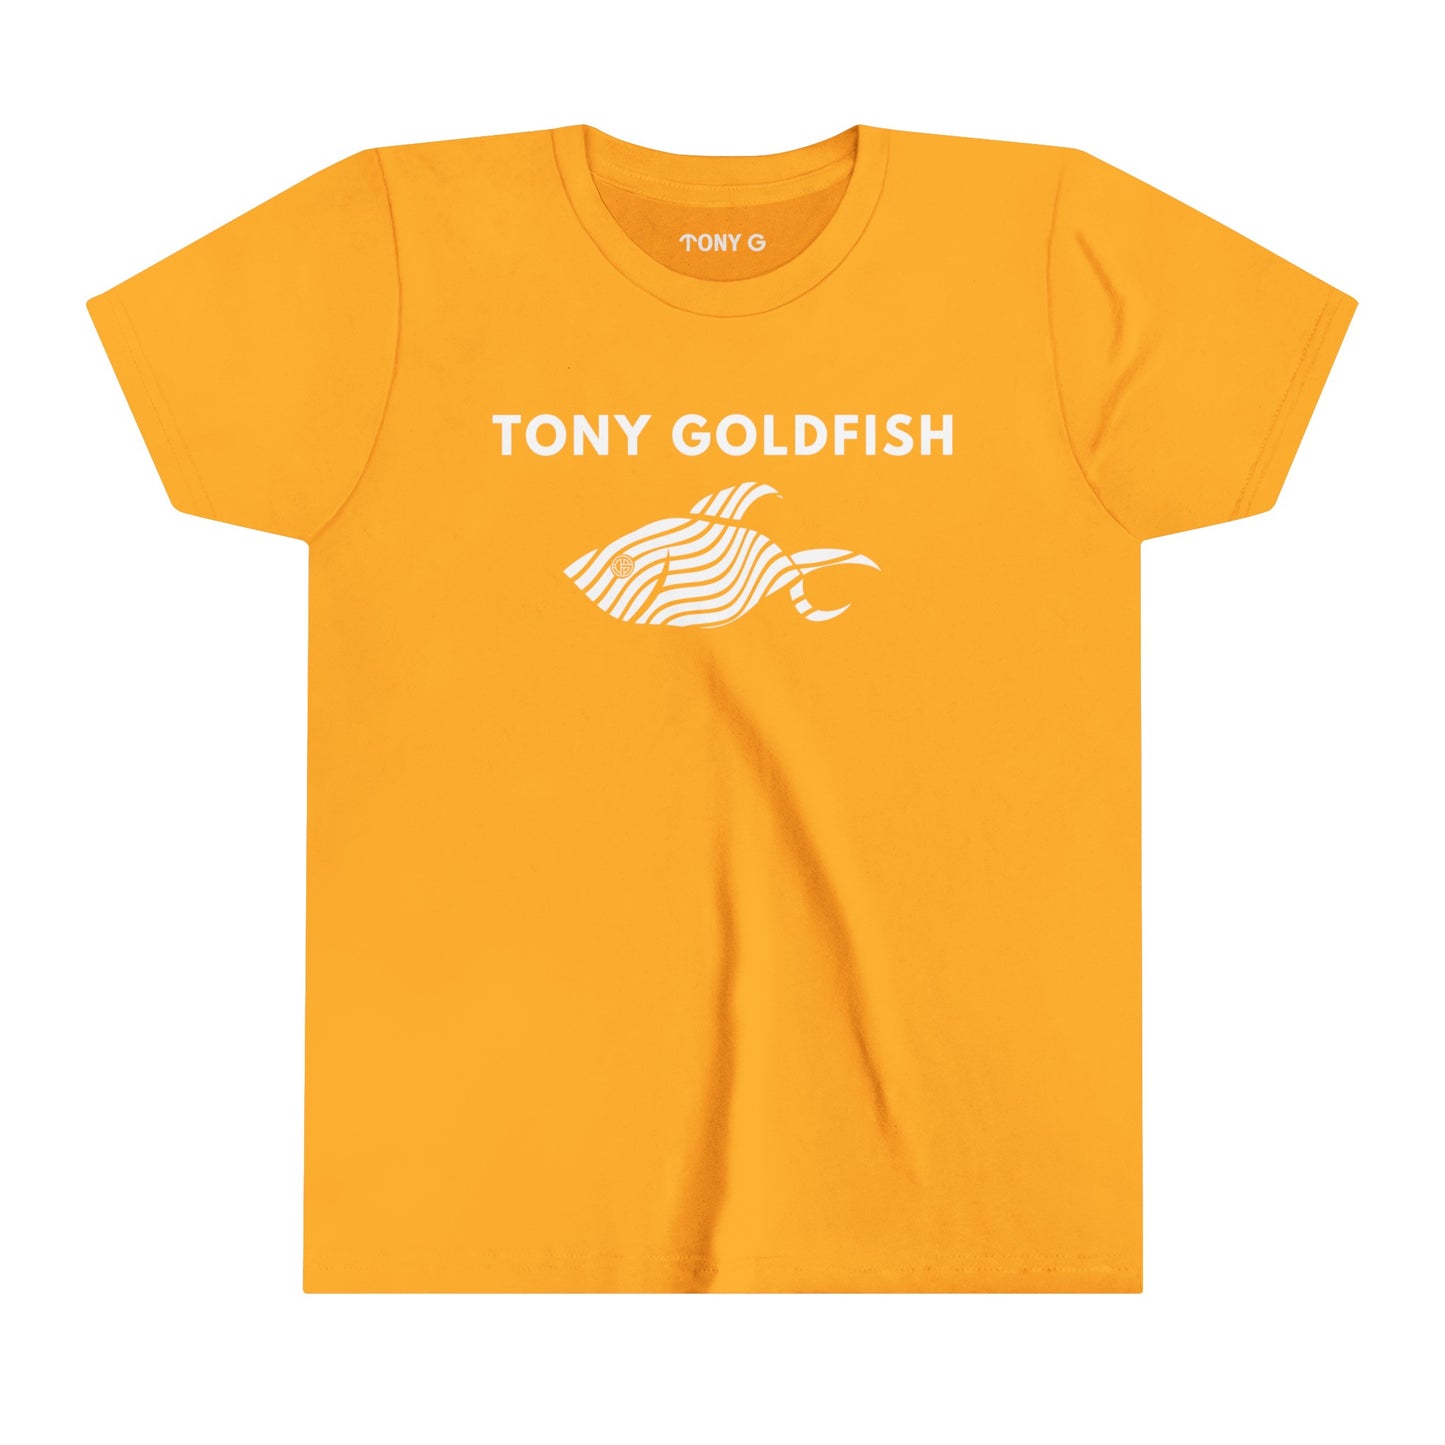 TONY Goldfish Youth Short Sleeve Tee, featuring the TONY Goldfish designs